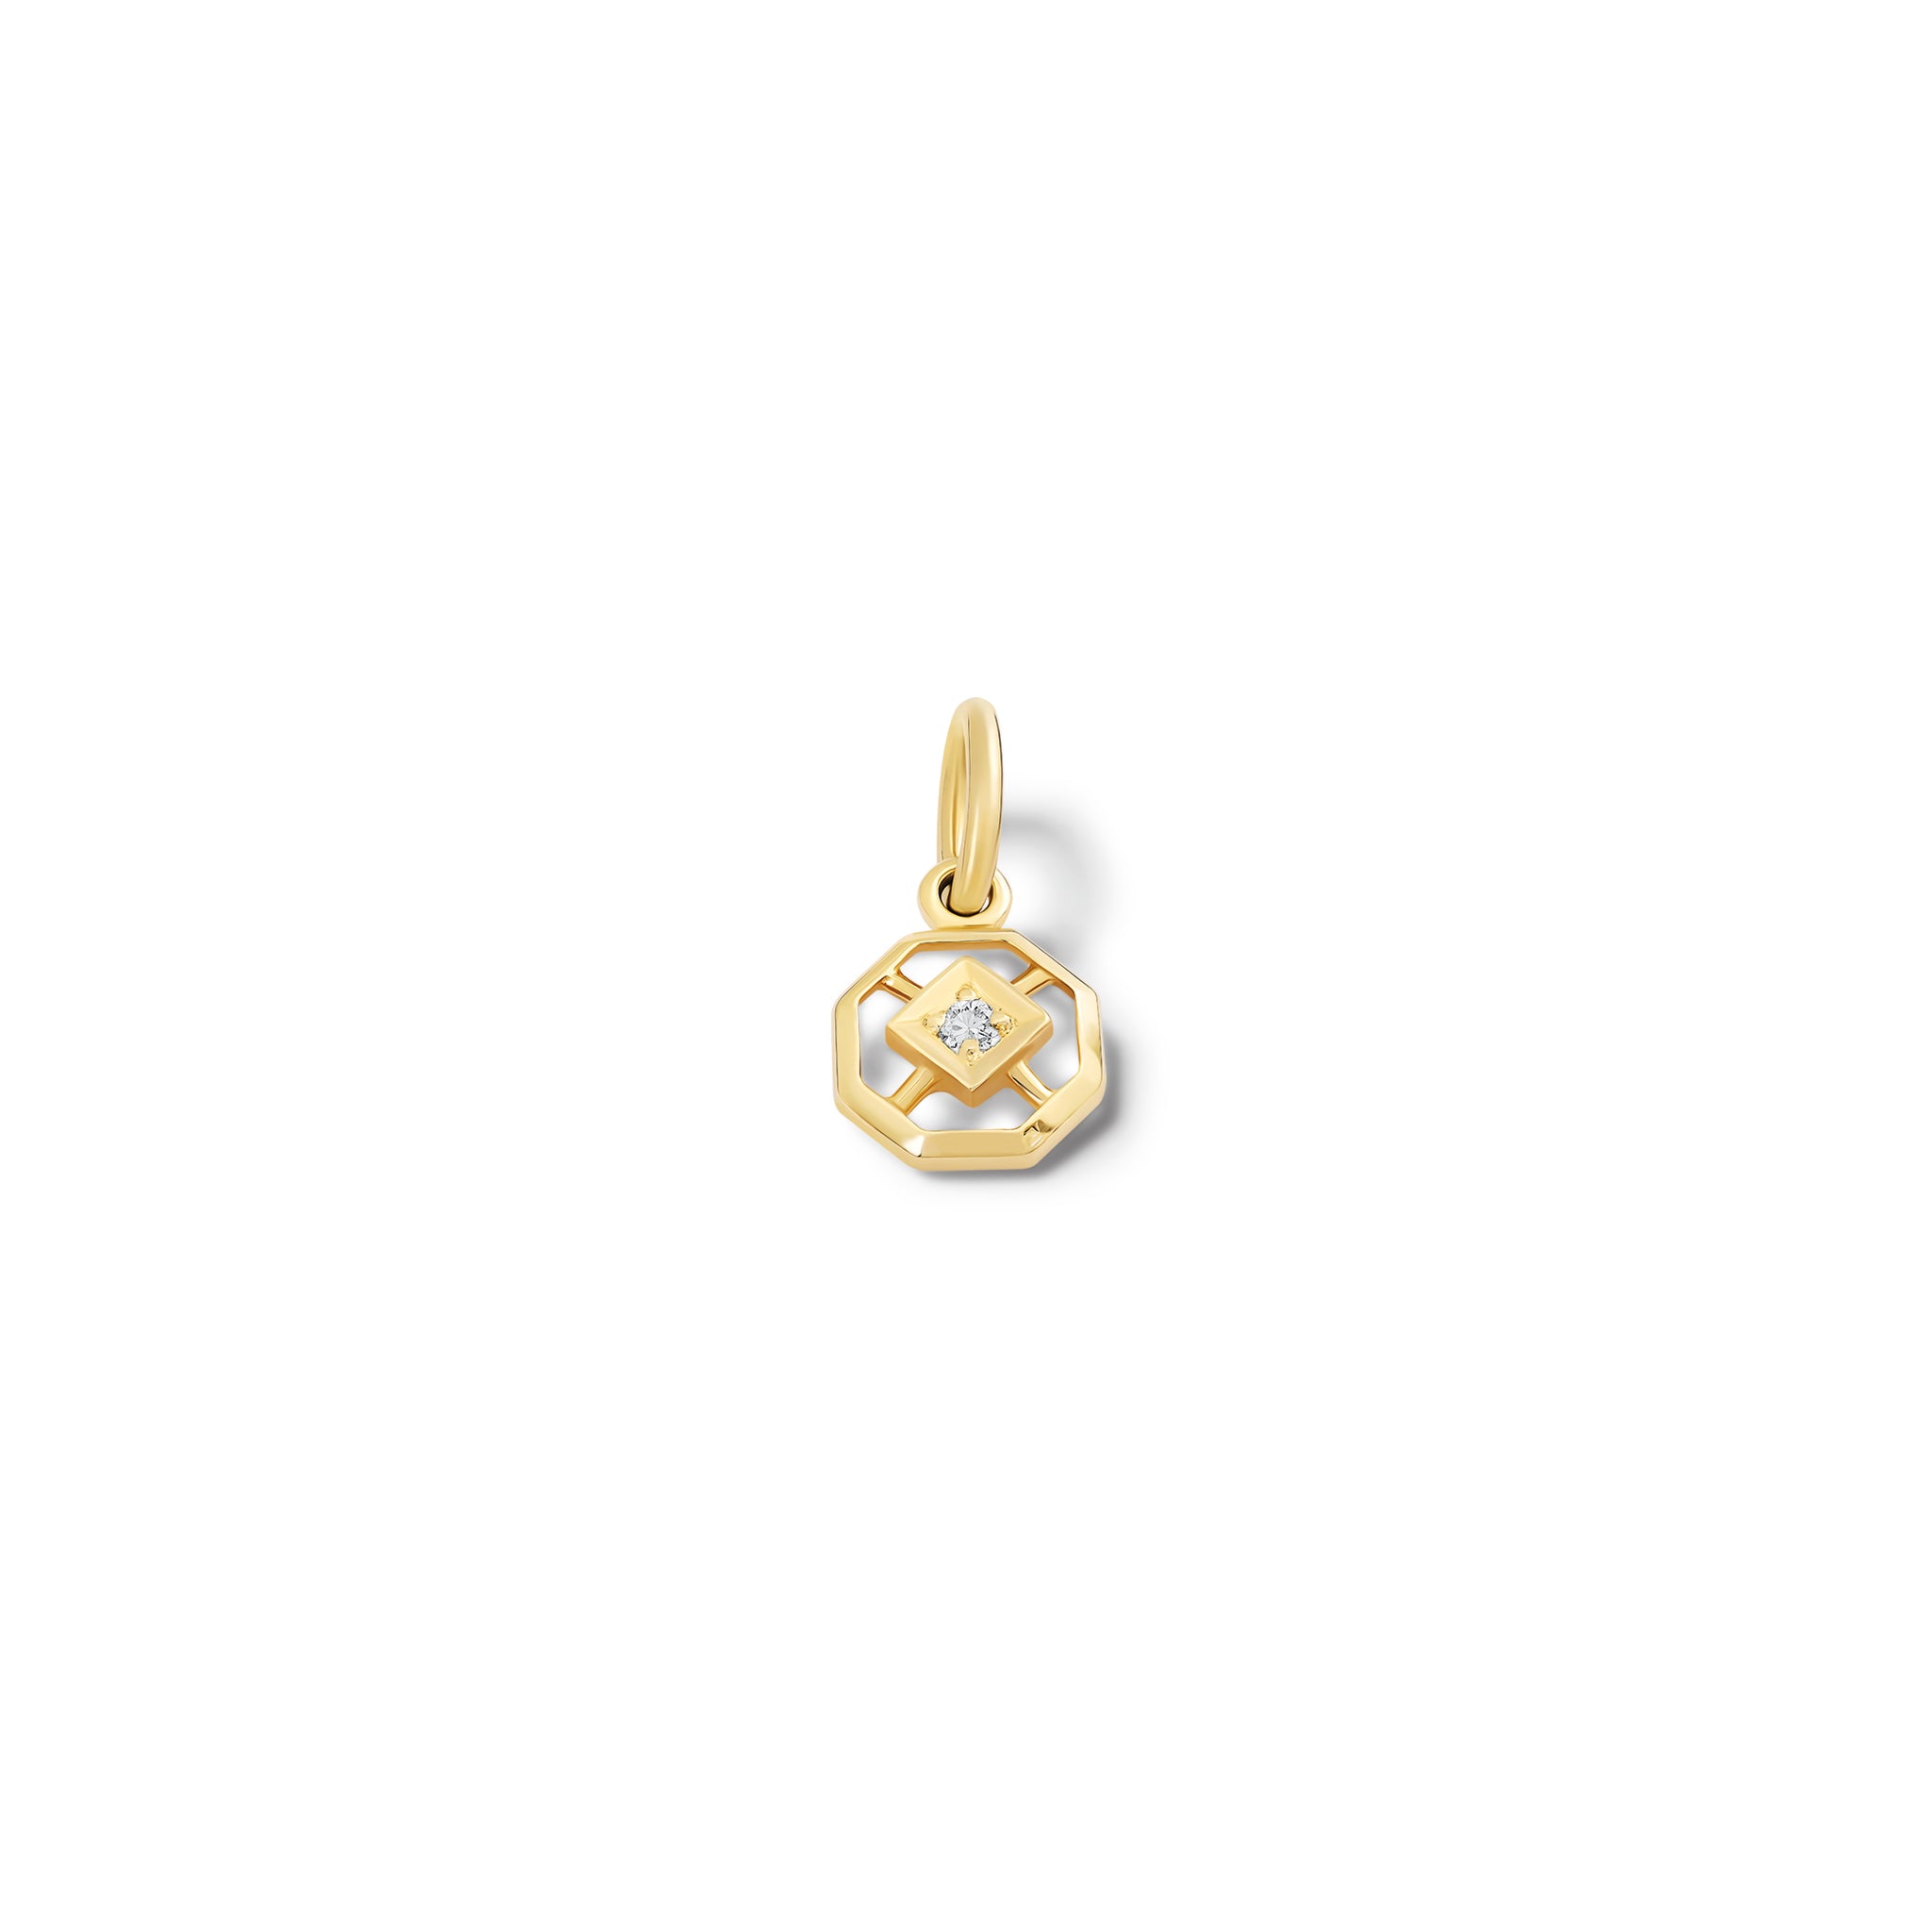 Parquet Small Necklace Pendant Yellow Gold - Diamond